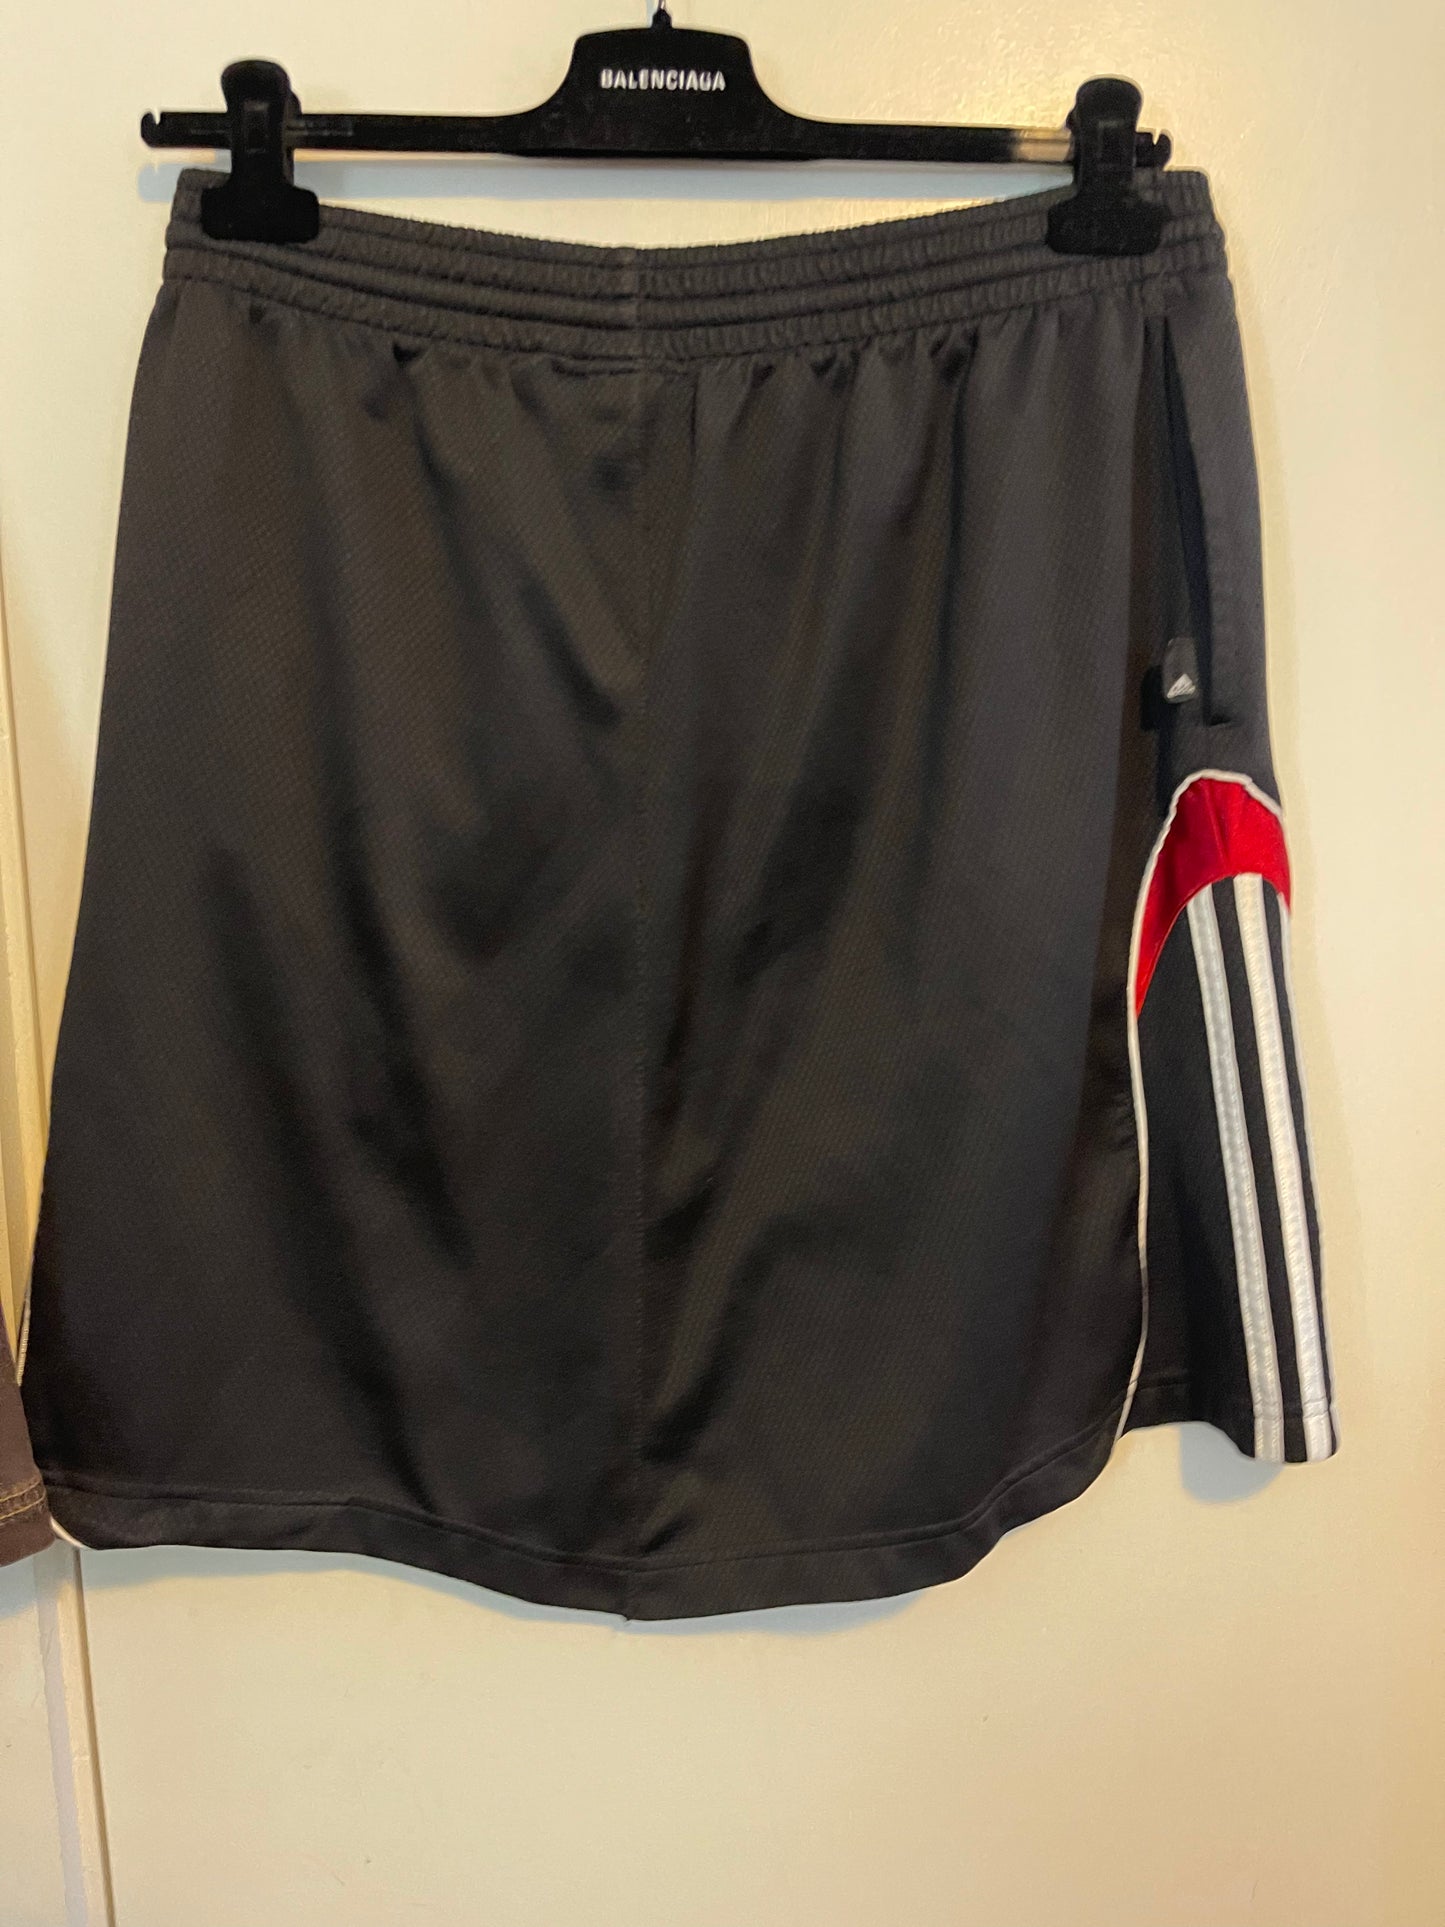 Kunai NYC track adidas skirt